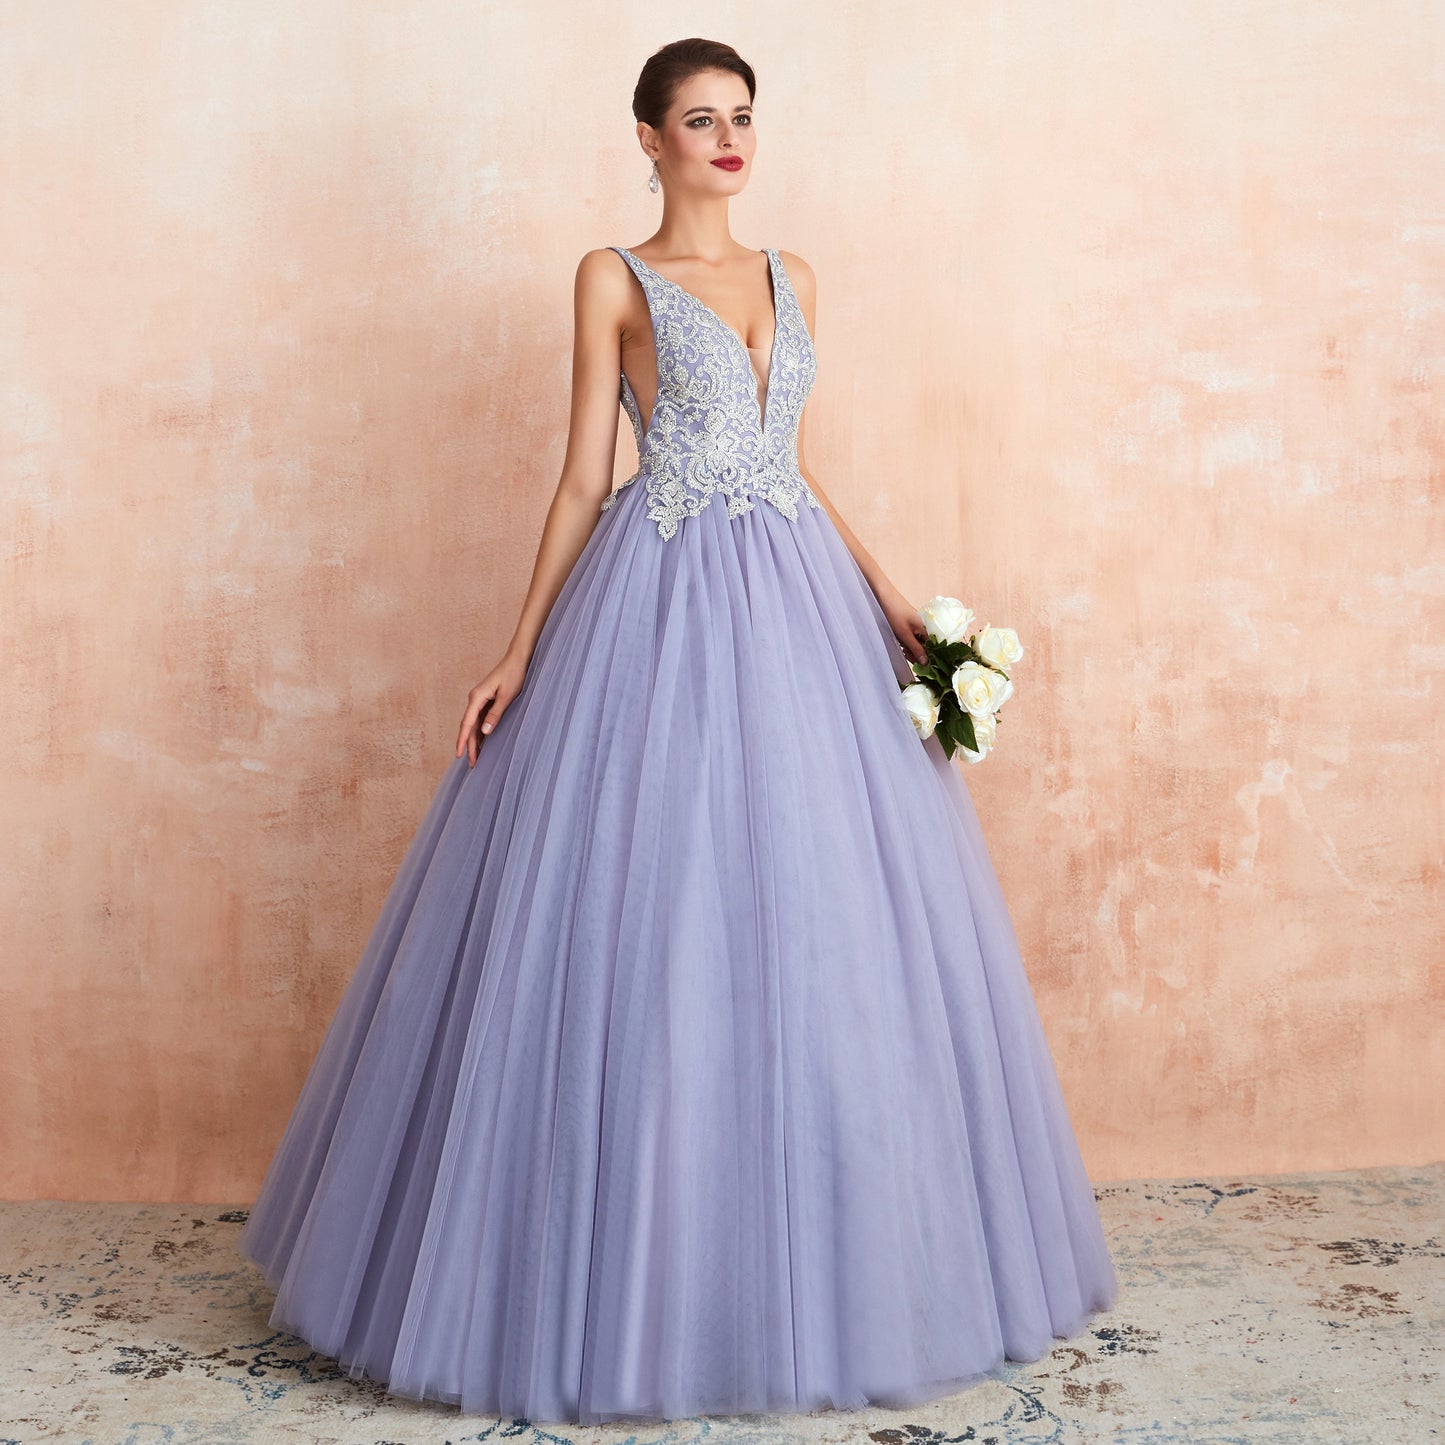 Sleeveless Light Purple Tulle Ball Gown Prom Dresses